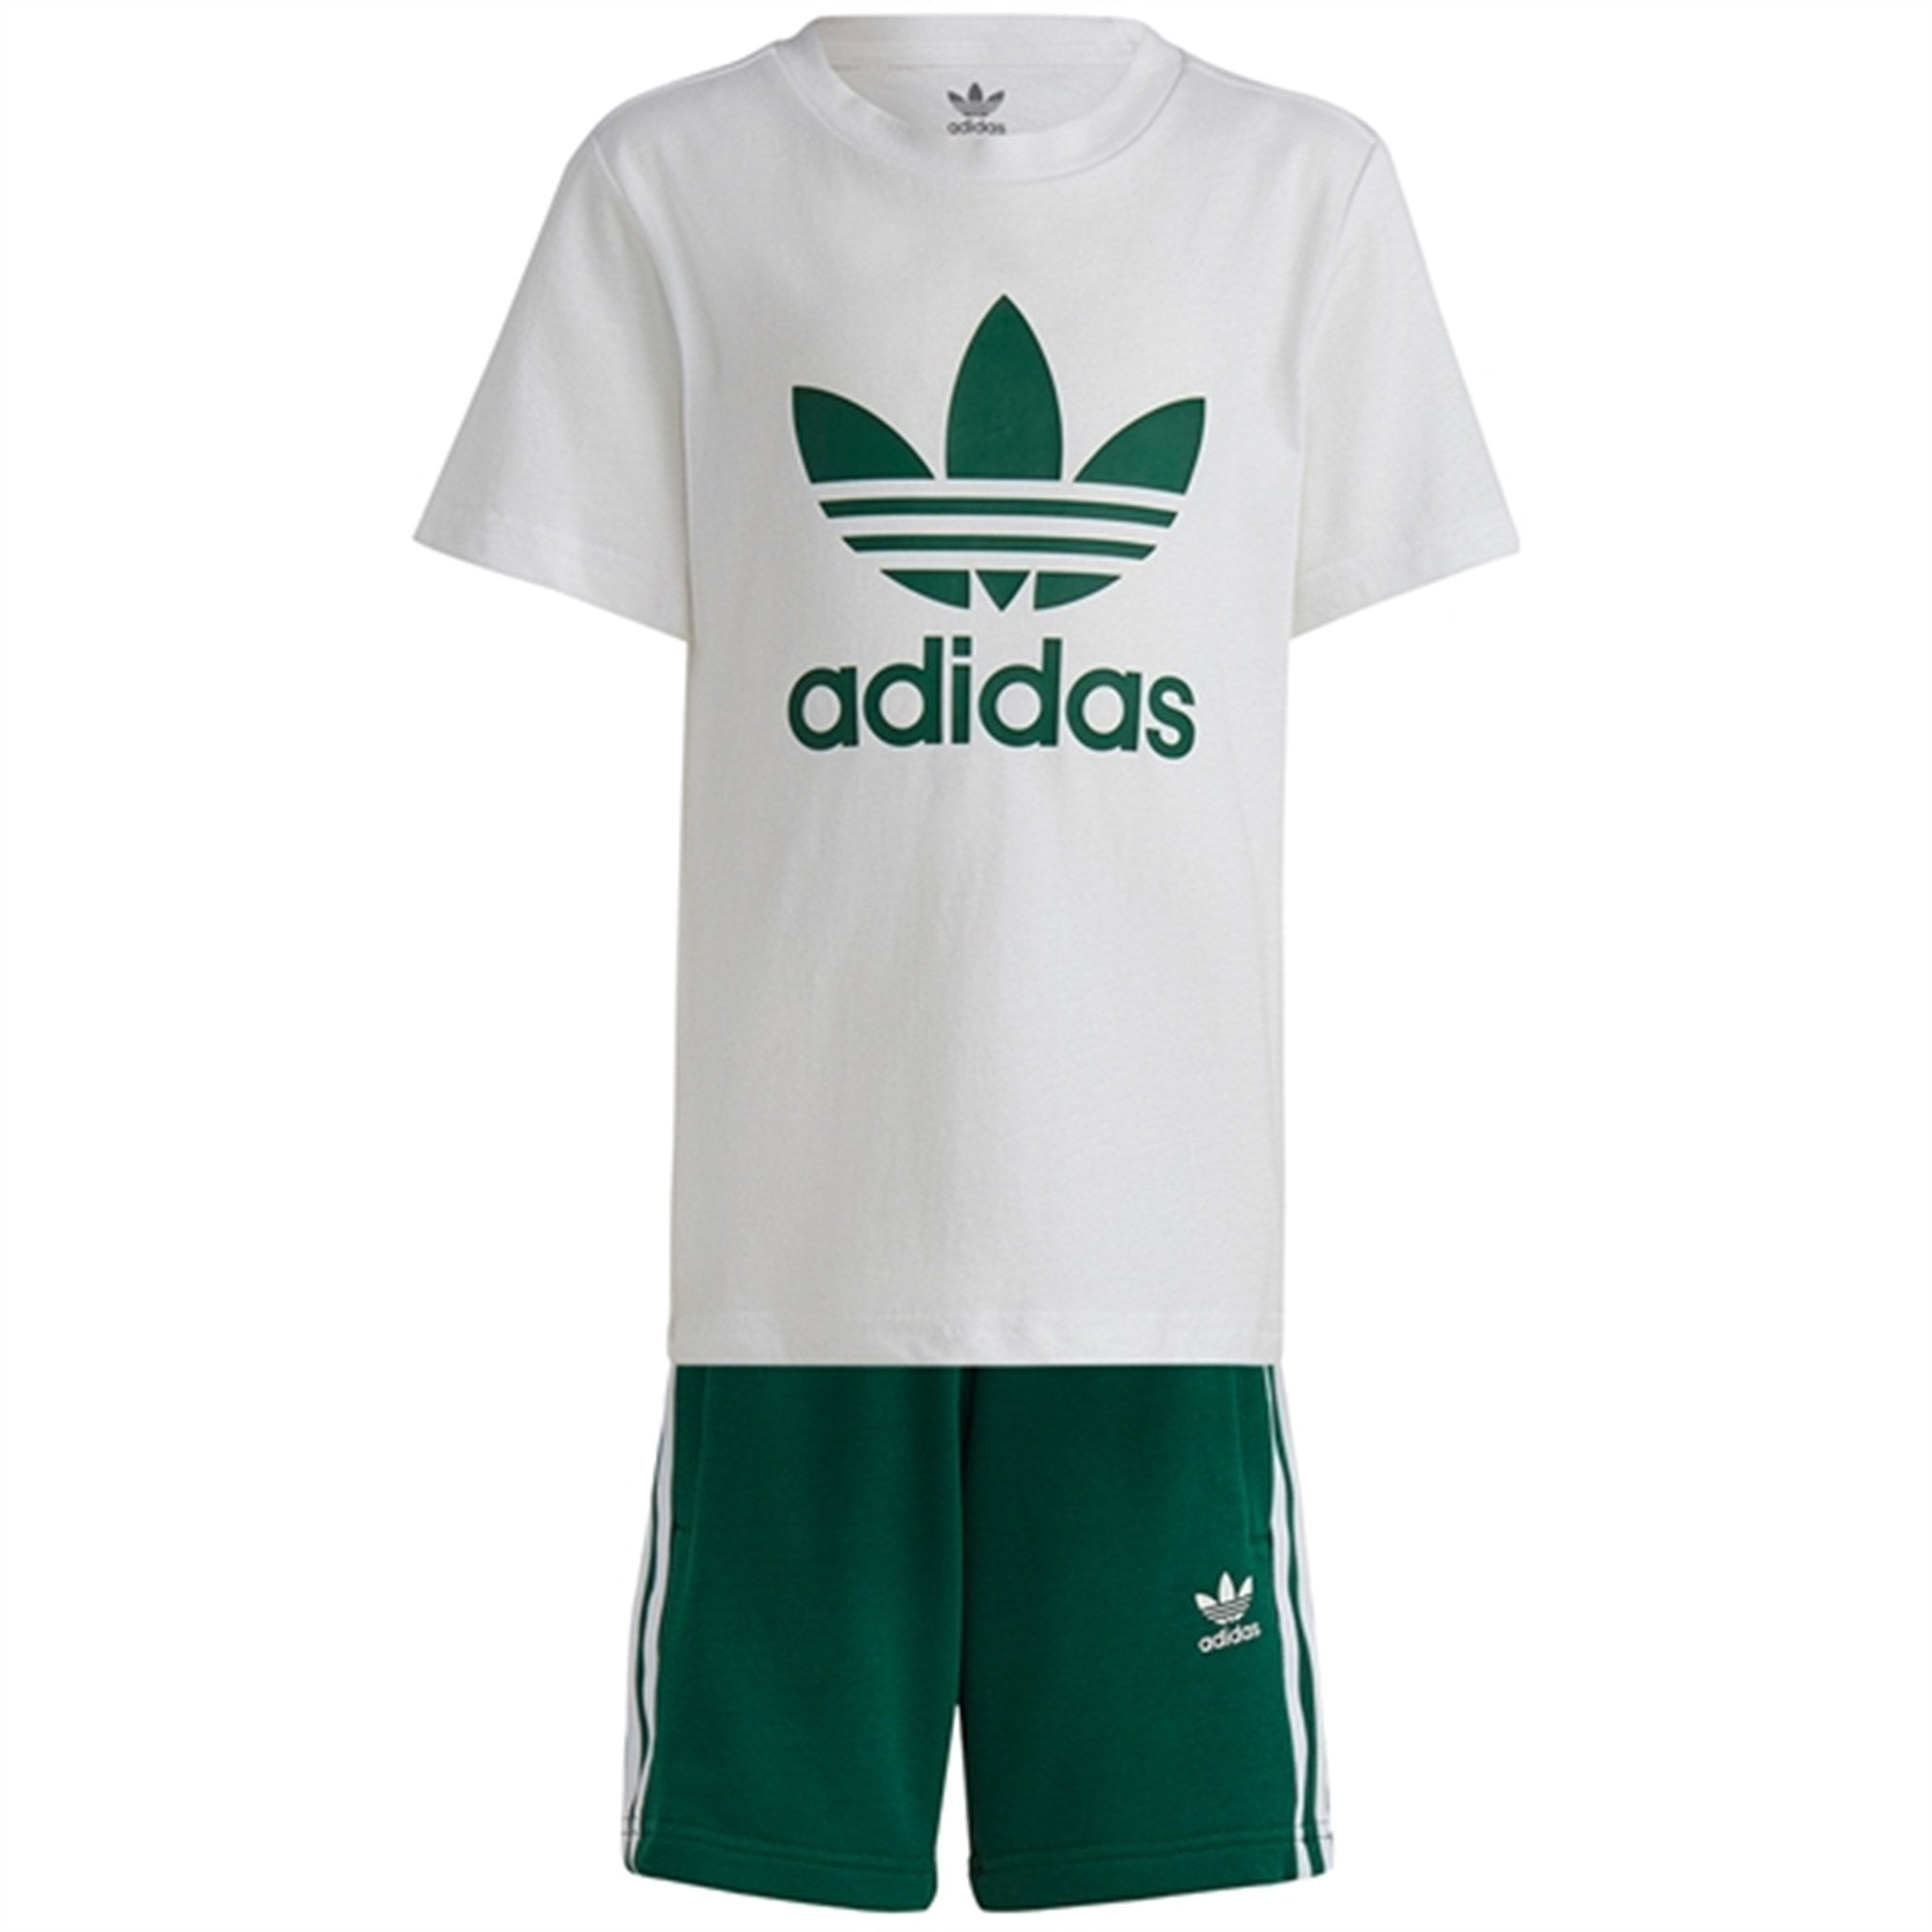 adidas Originals Dark Green Shorts Tee Set